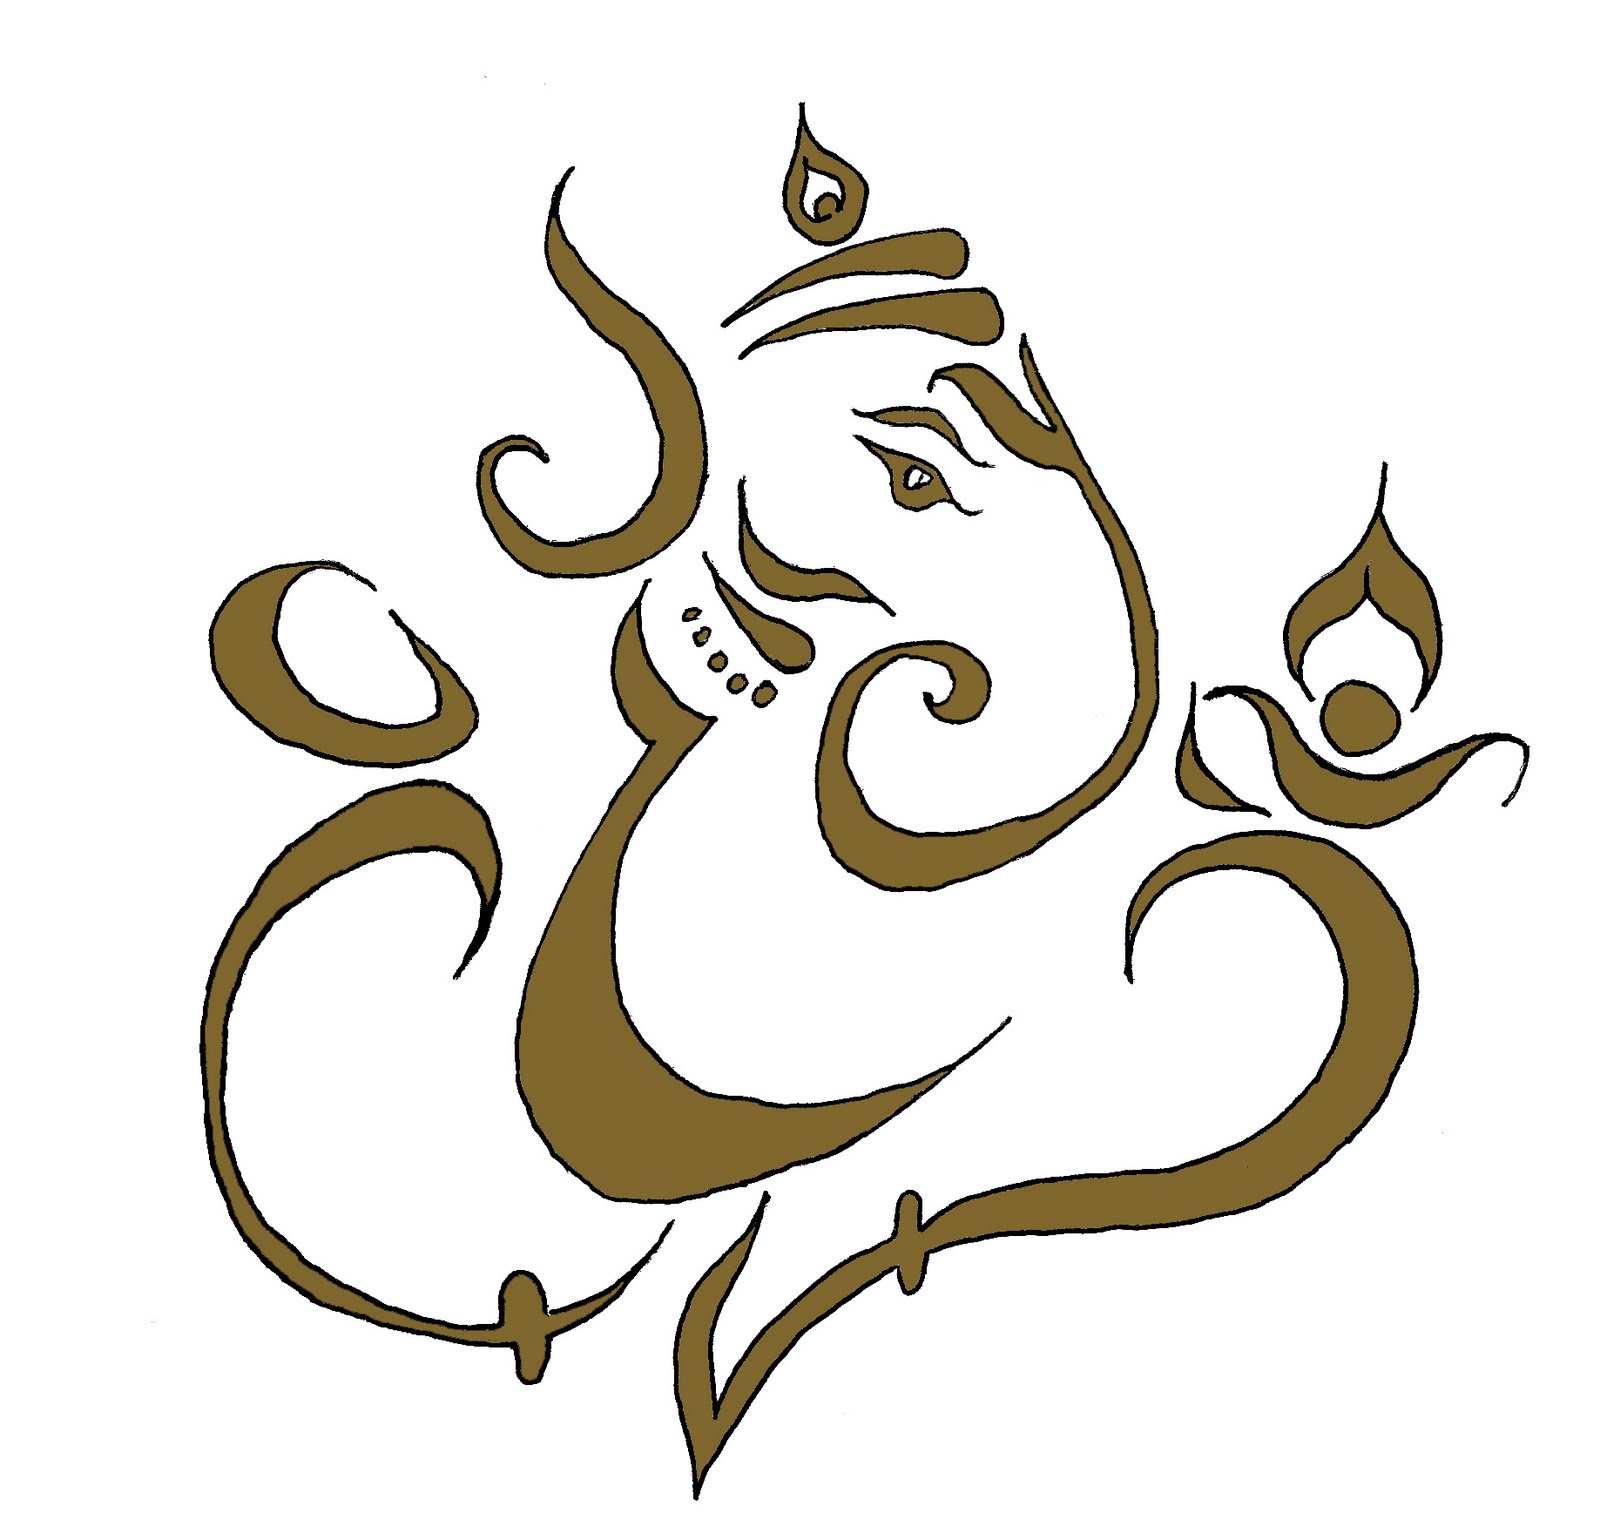 Logo Ganesh | Joy Studio Design Gallery - Best Design